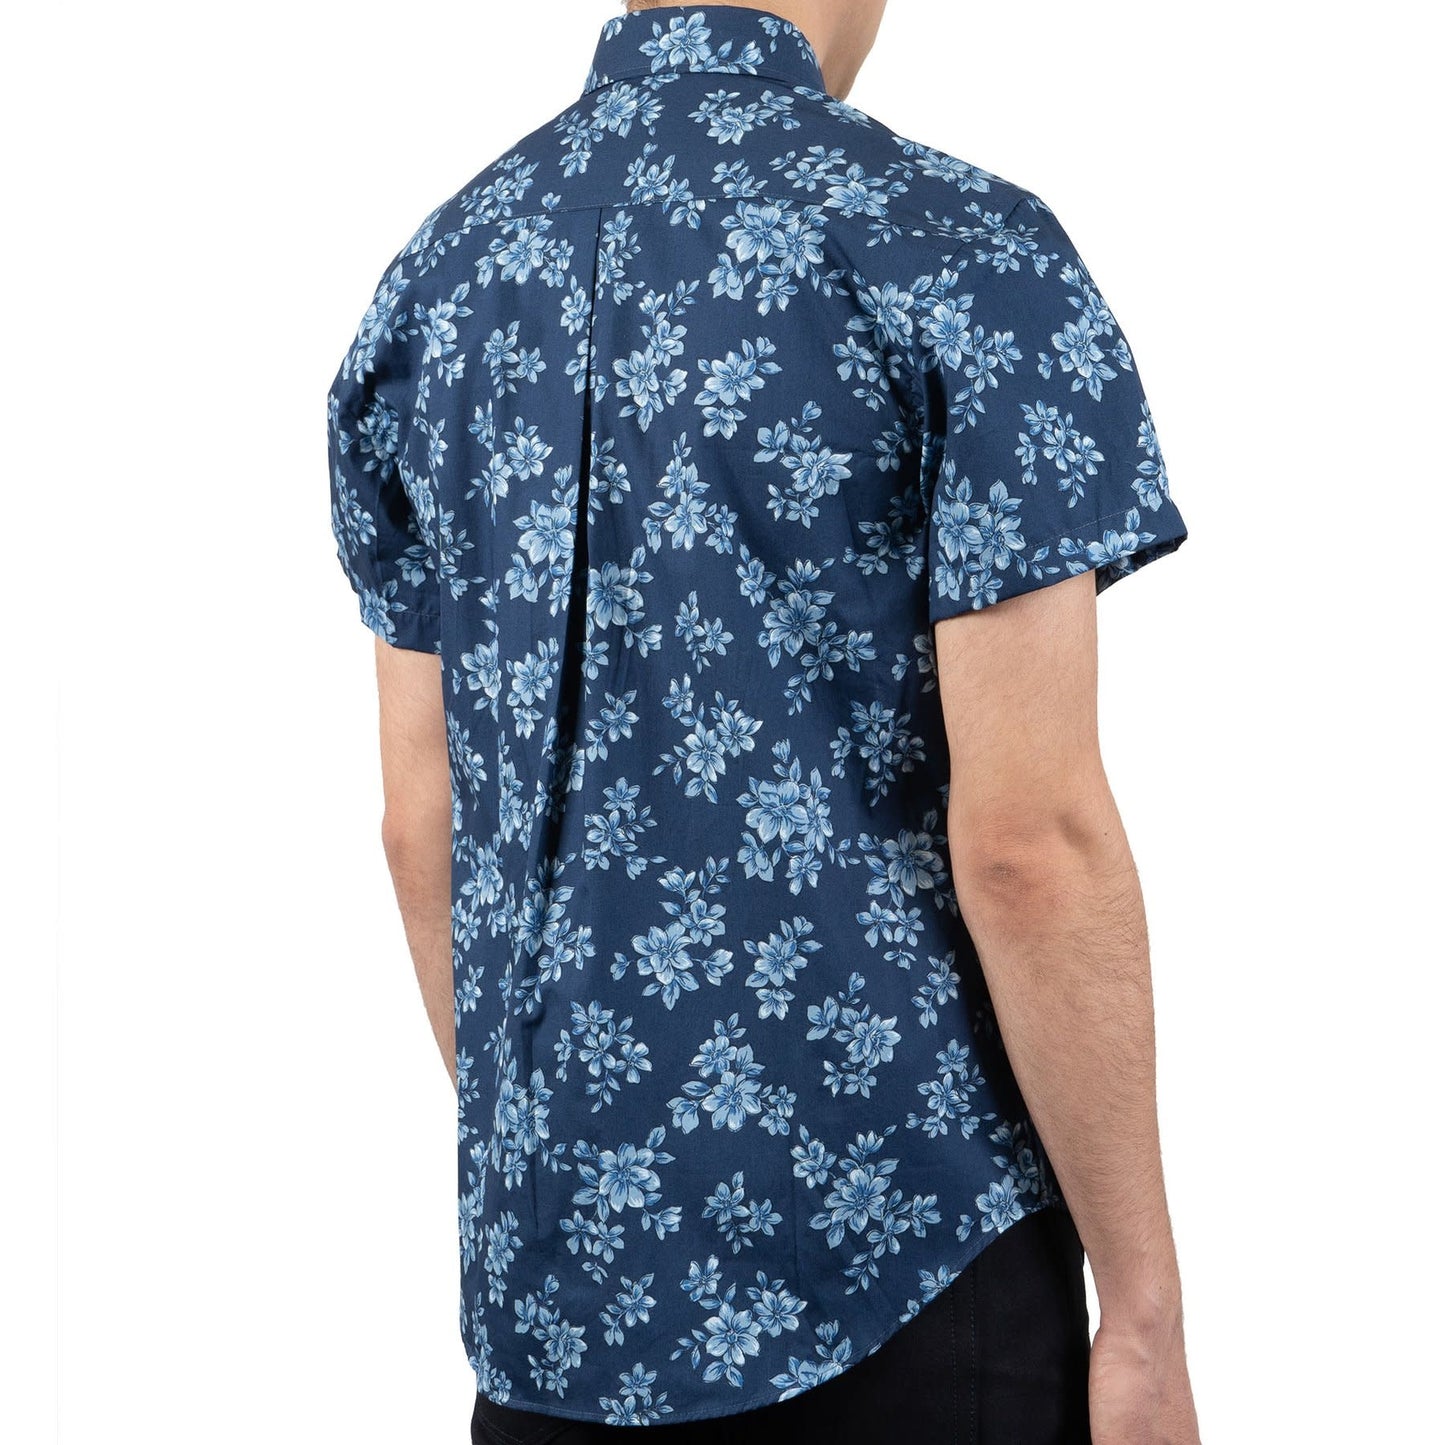 S/S Easy Shirt Blue Floral Sketch